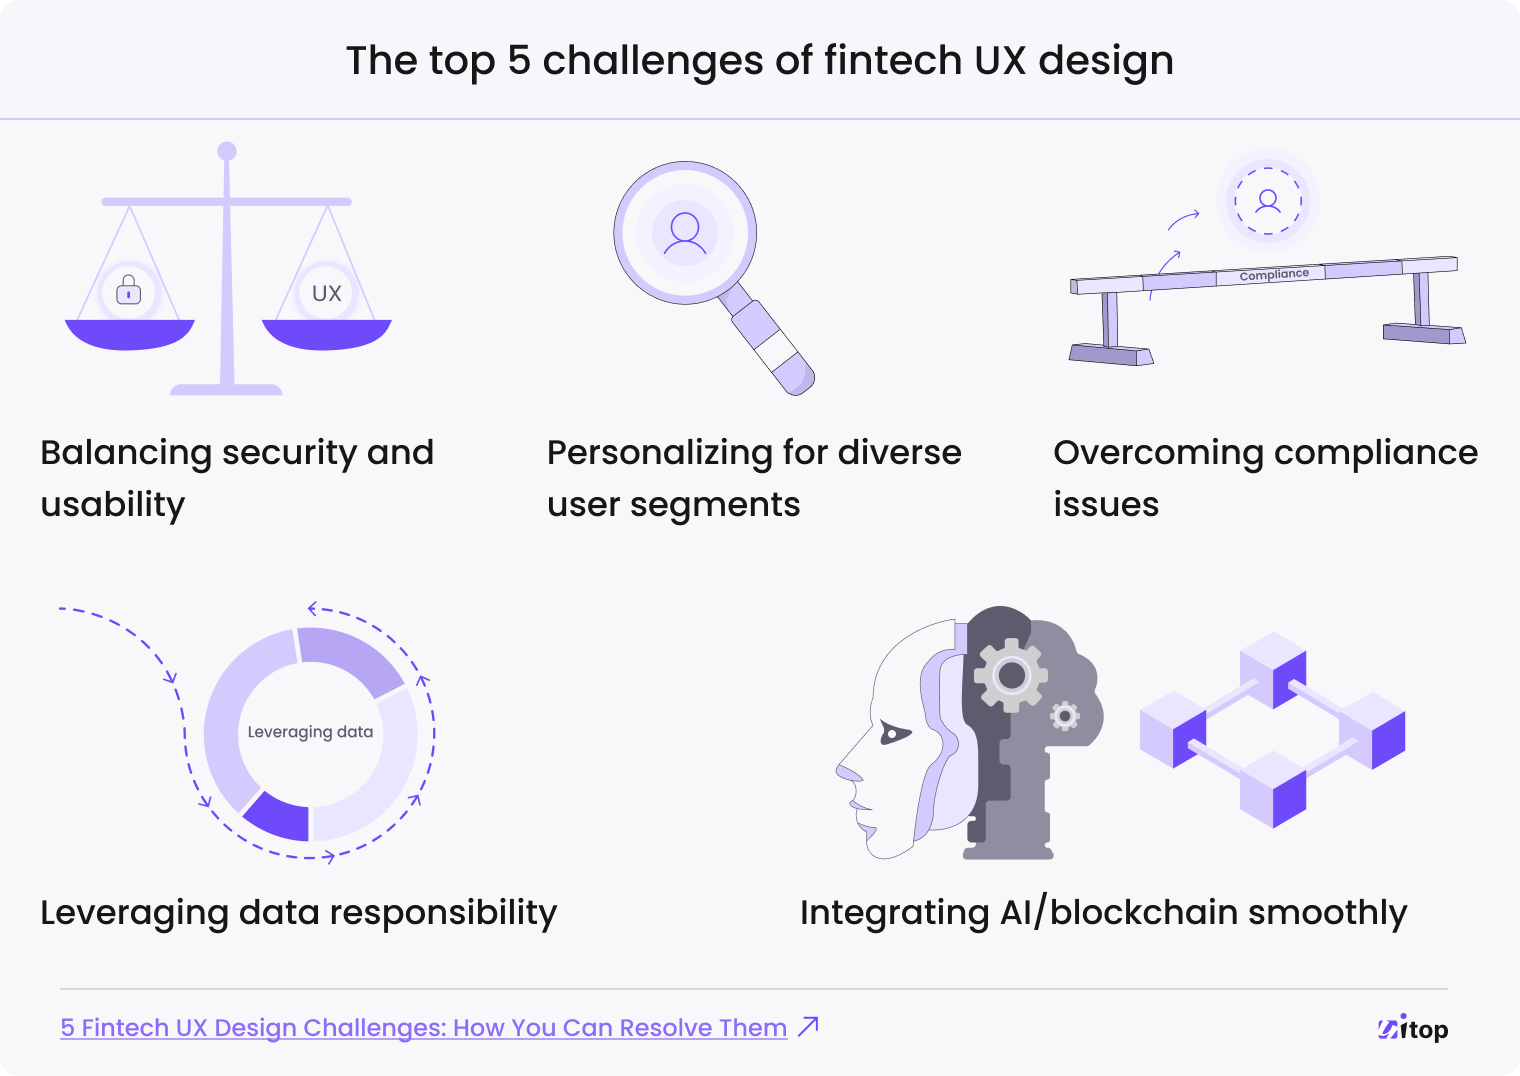 5 challenges of fintech UX design